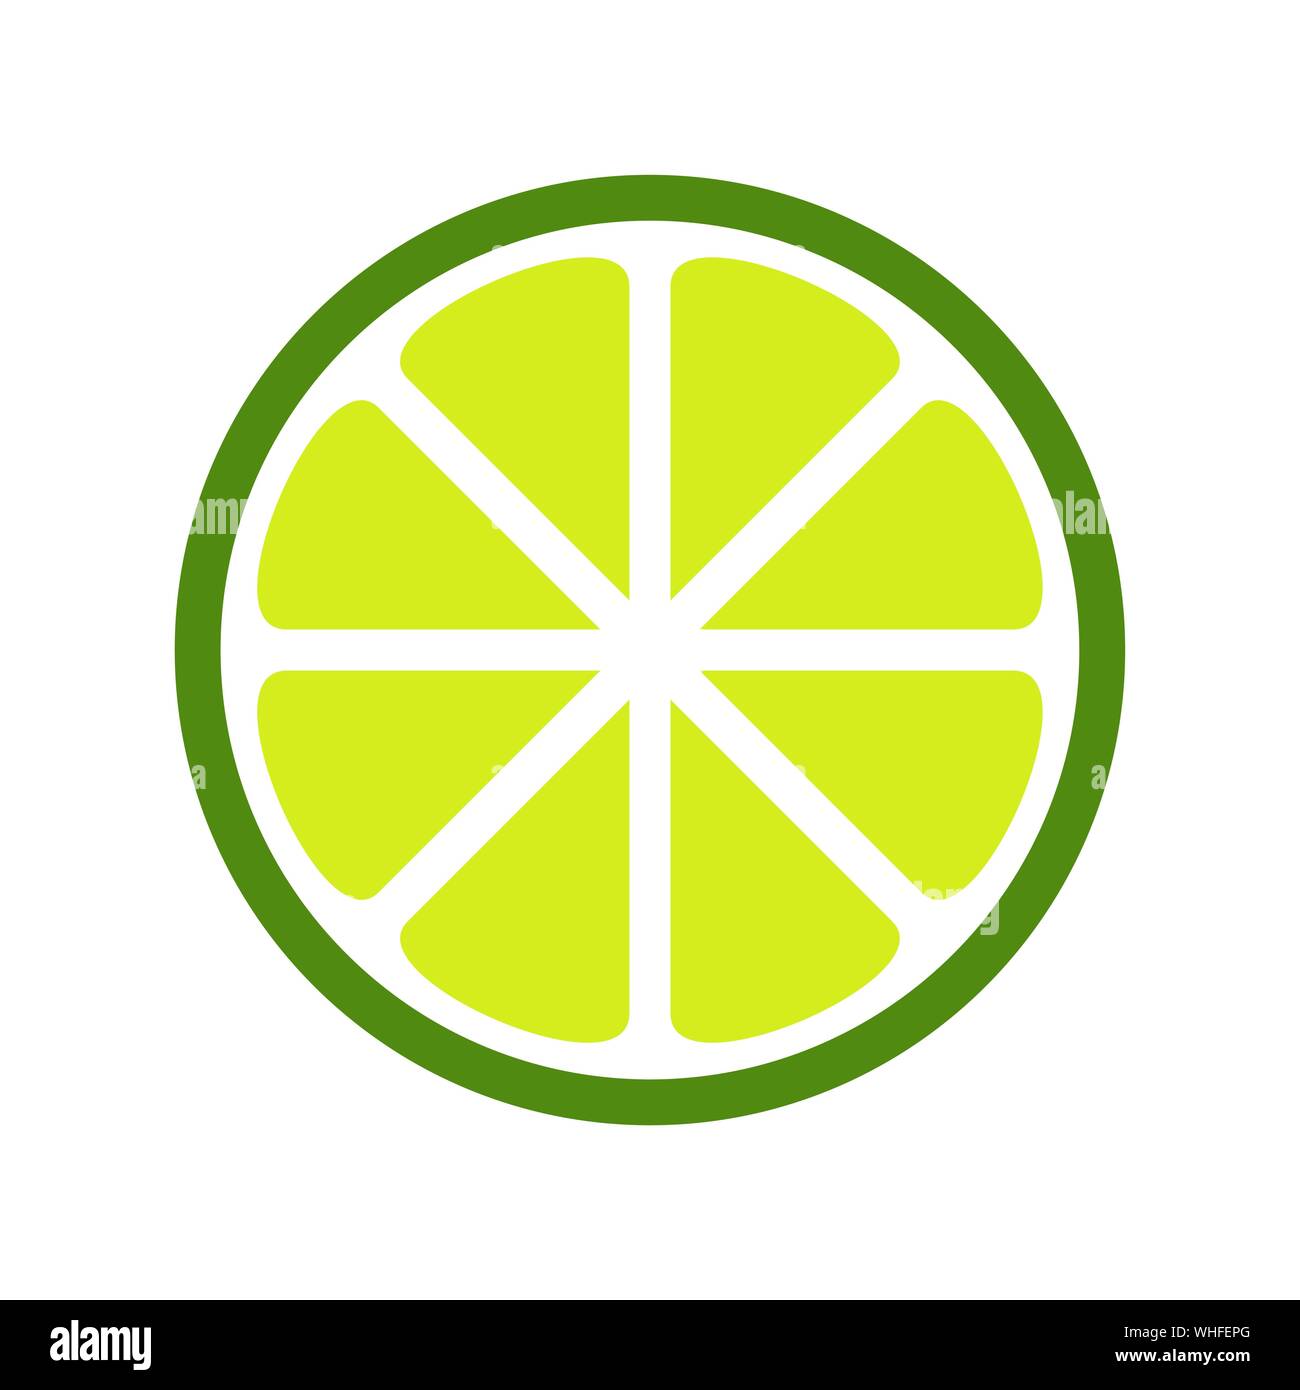 Green lime slice icon. Vector illustration. Stock Vector